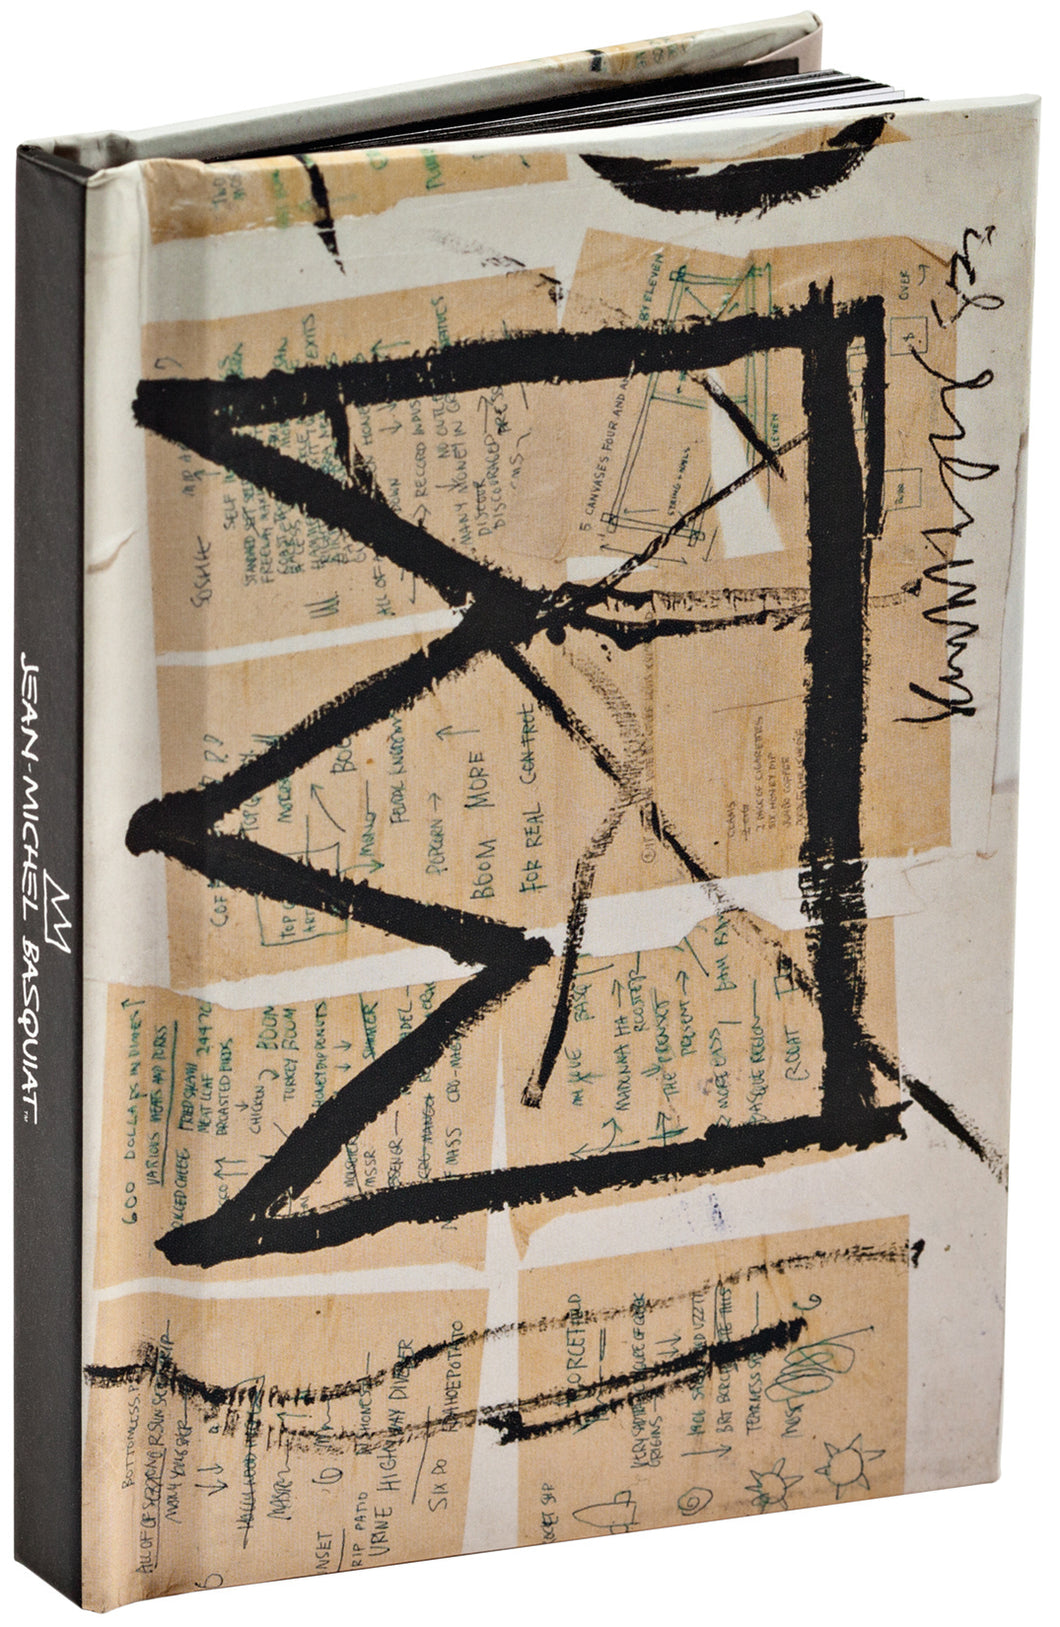 Jean-Michel Basquiat Mini Notebook, Crown (Untitled)